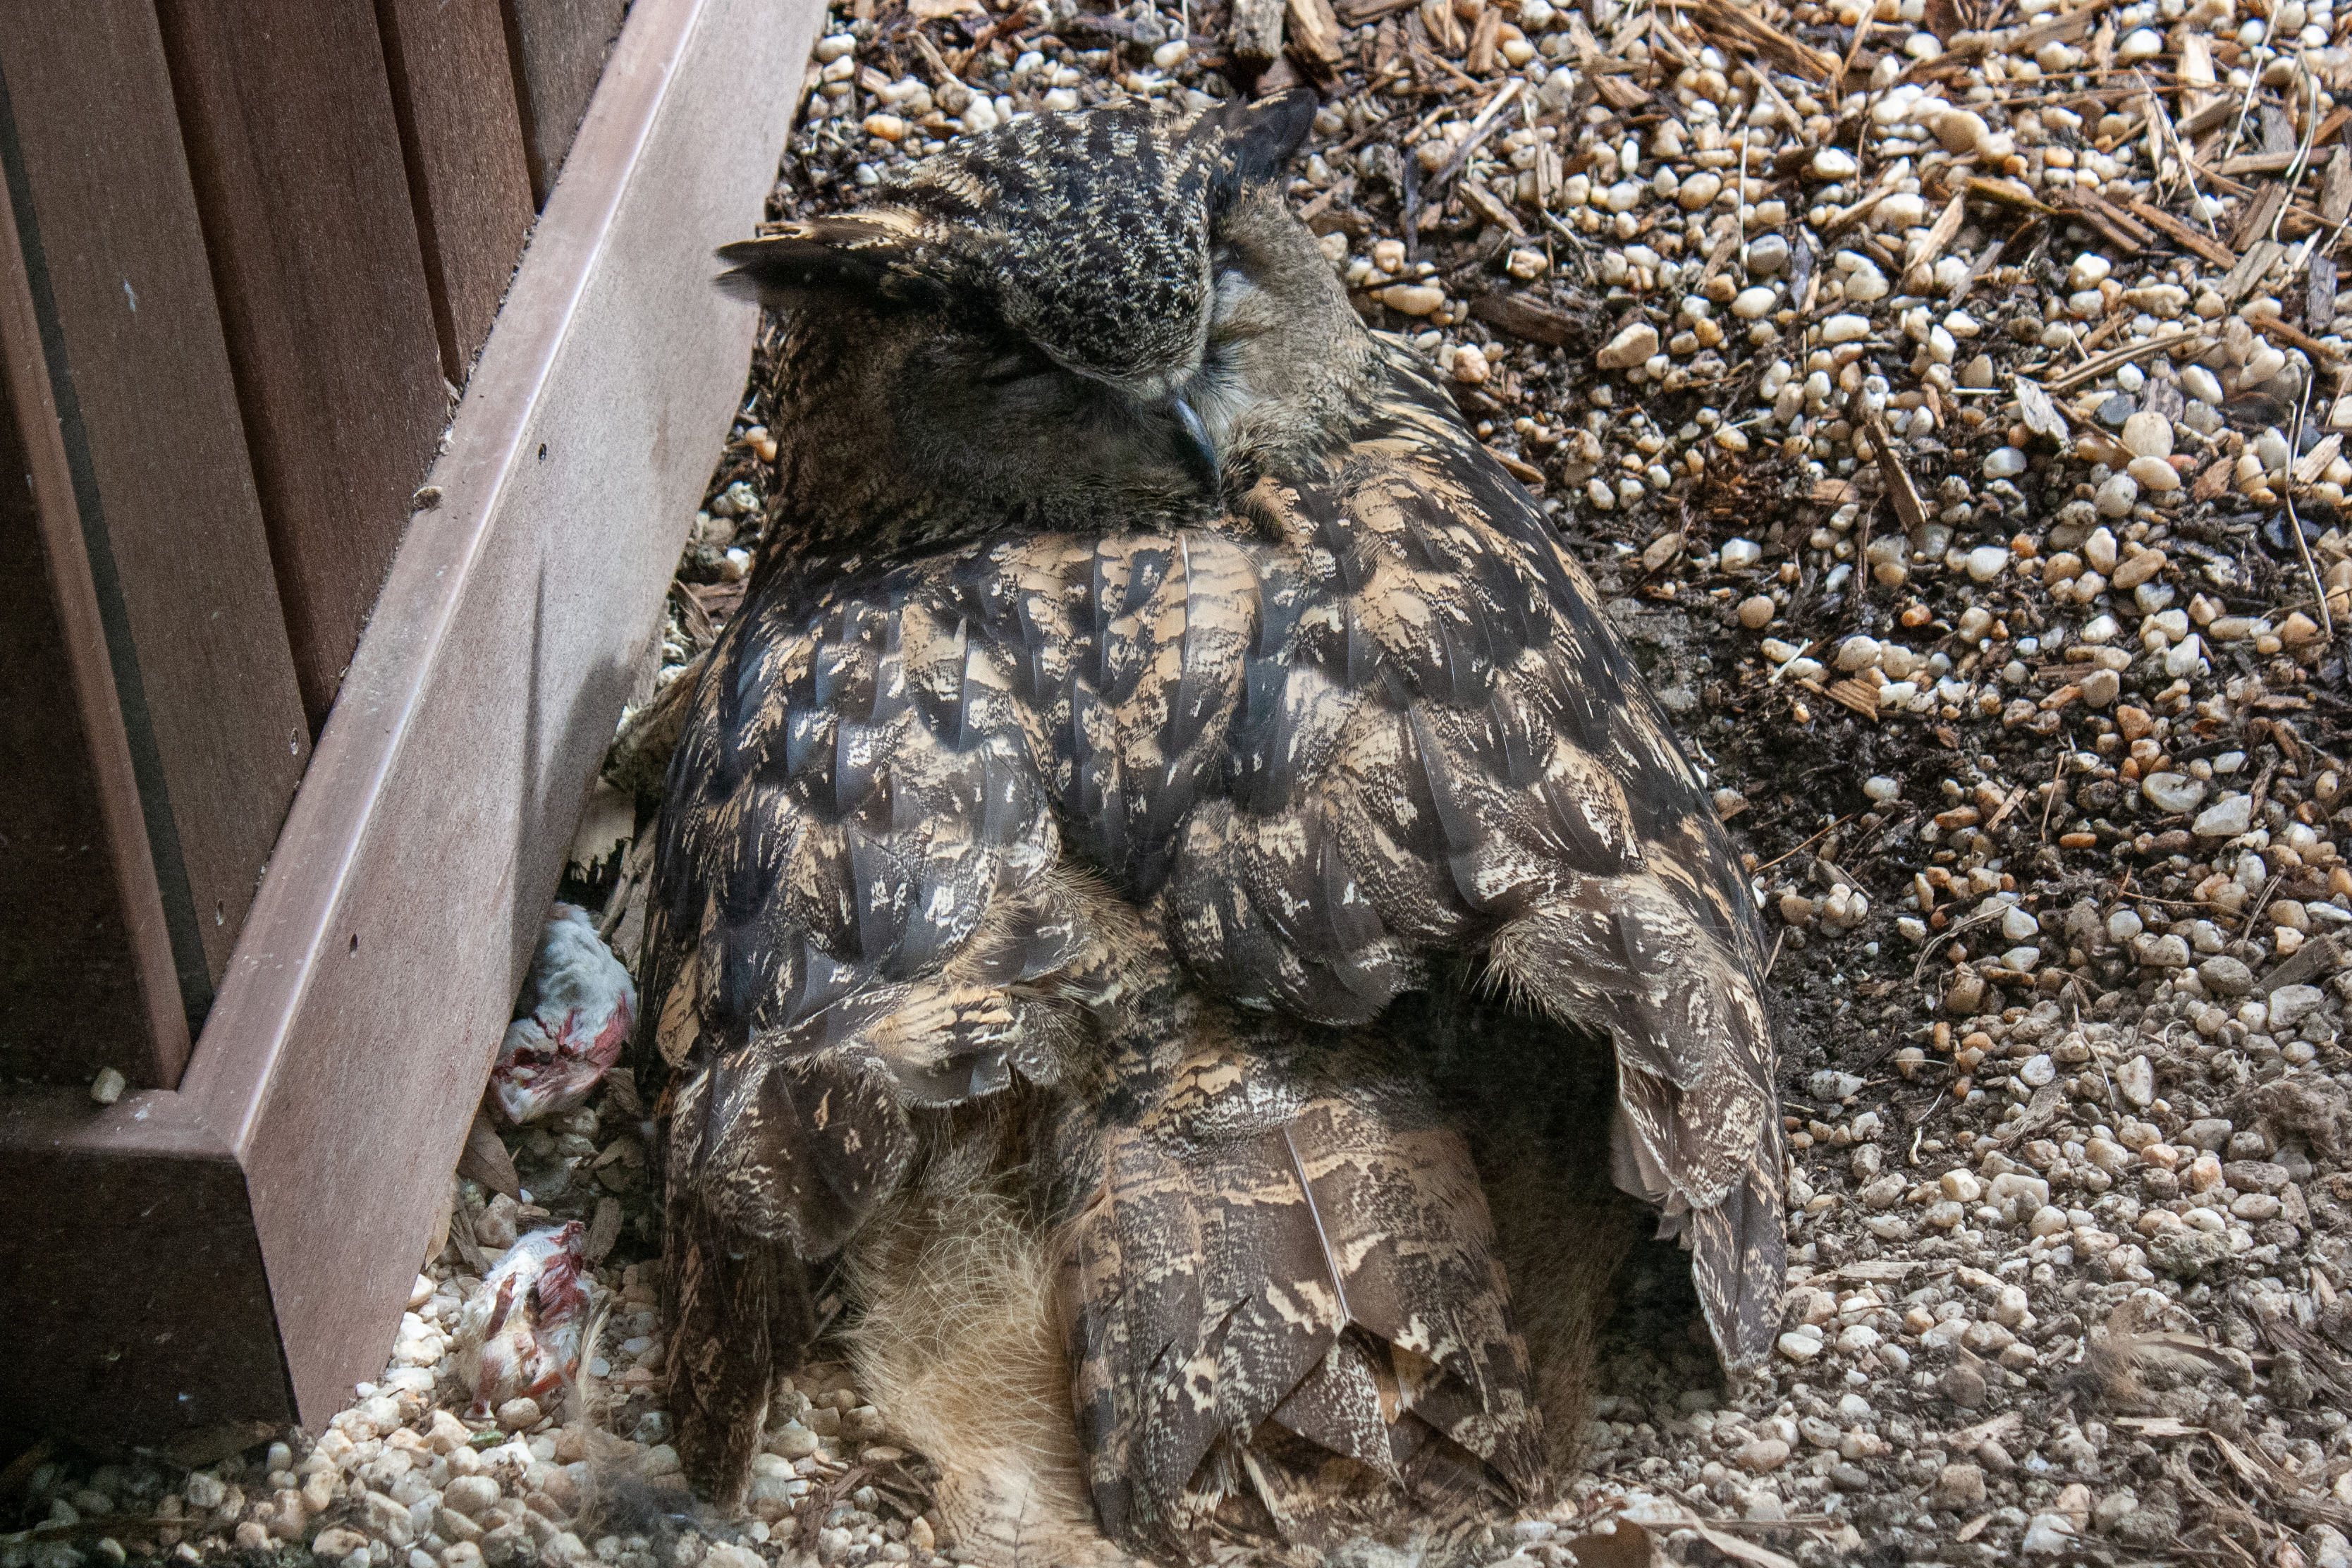 a sleeping eurasian eagle-owl